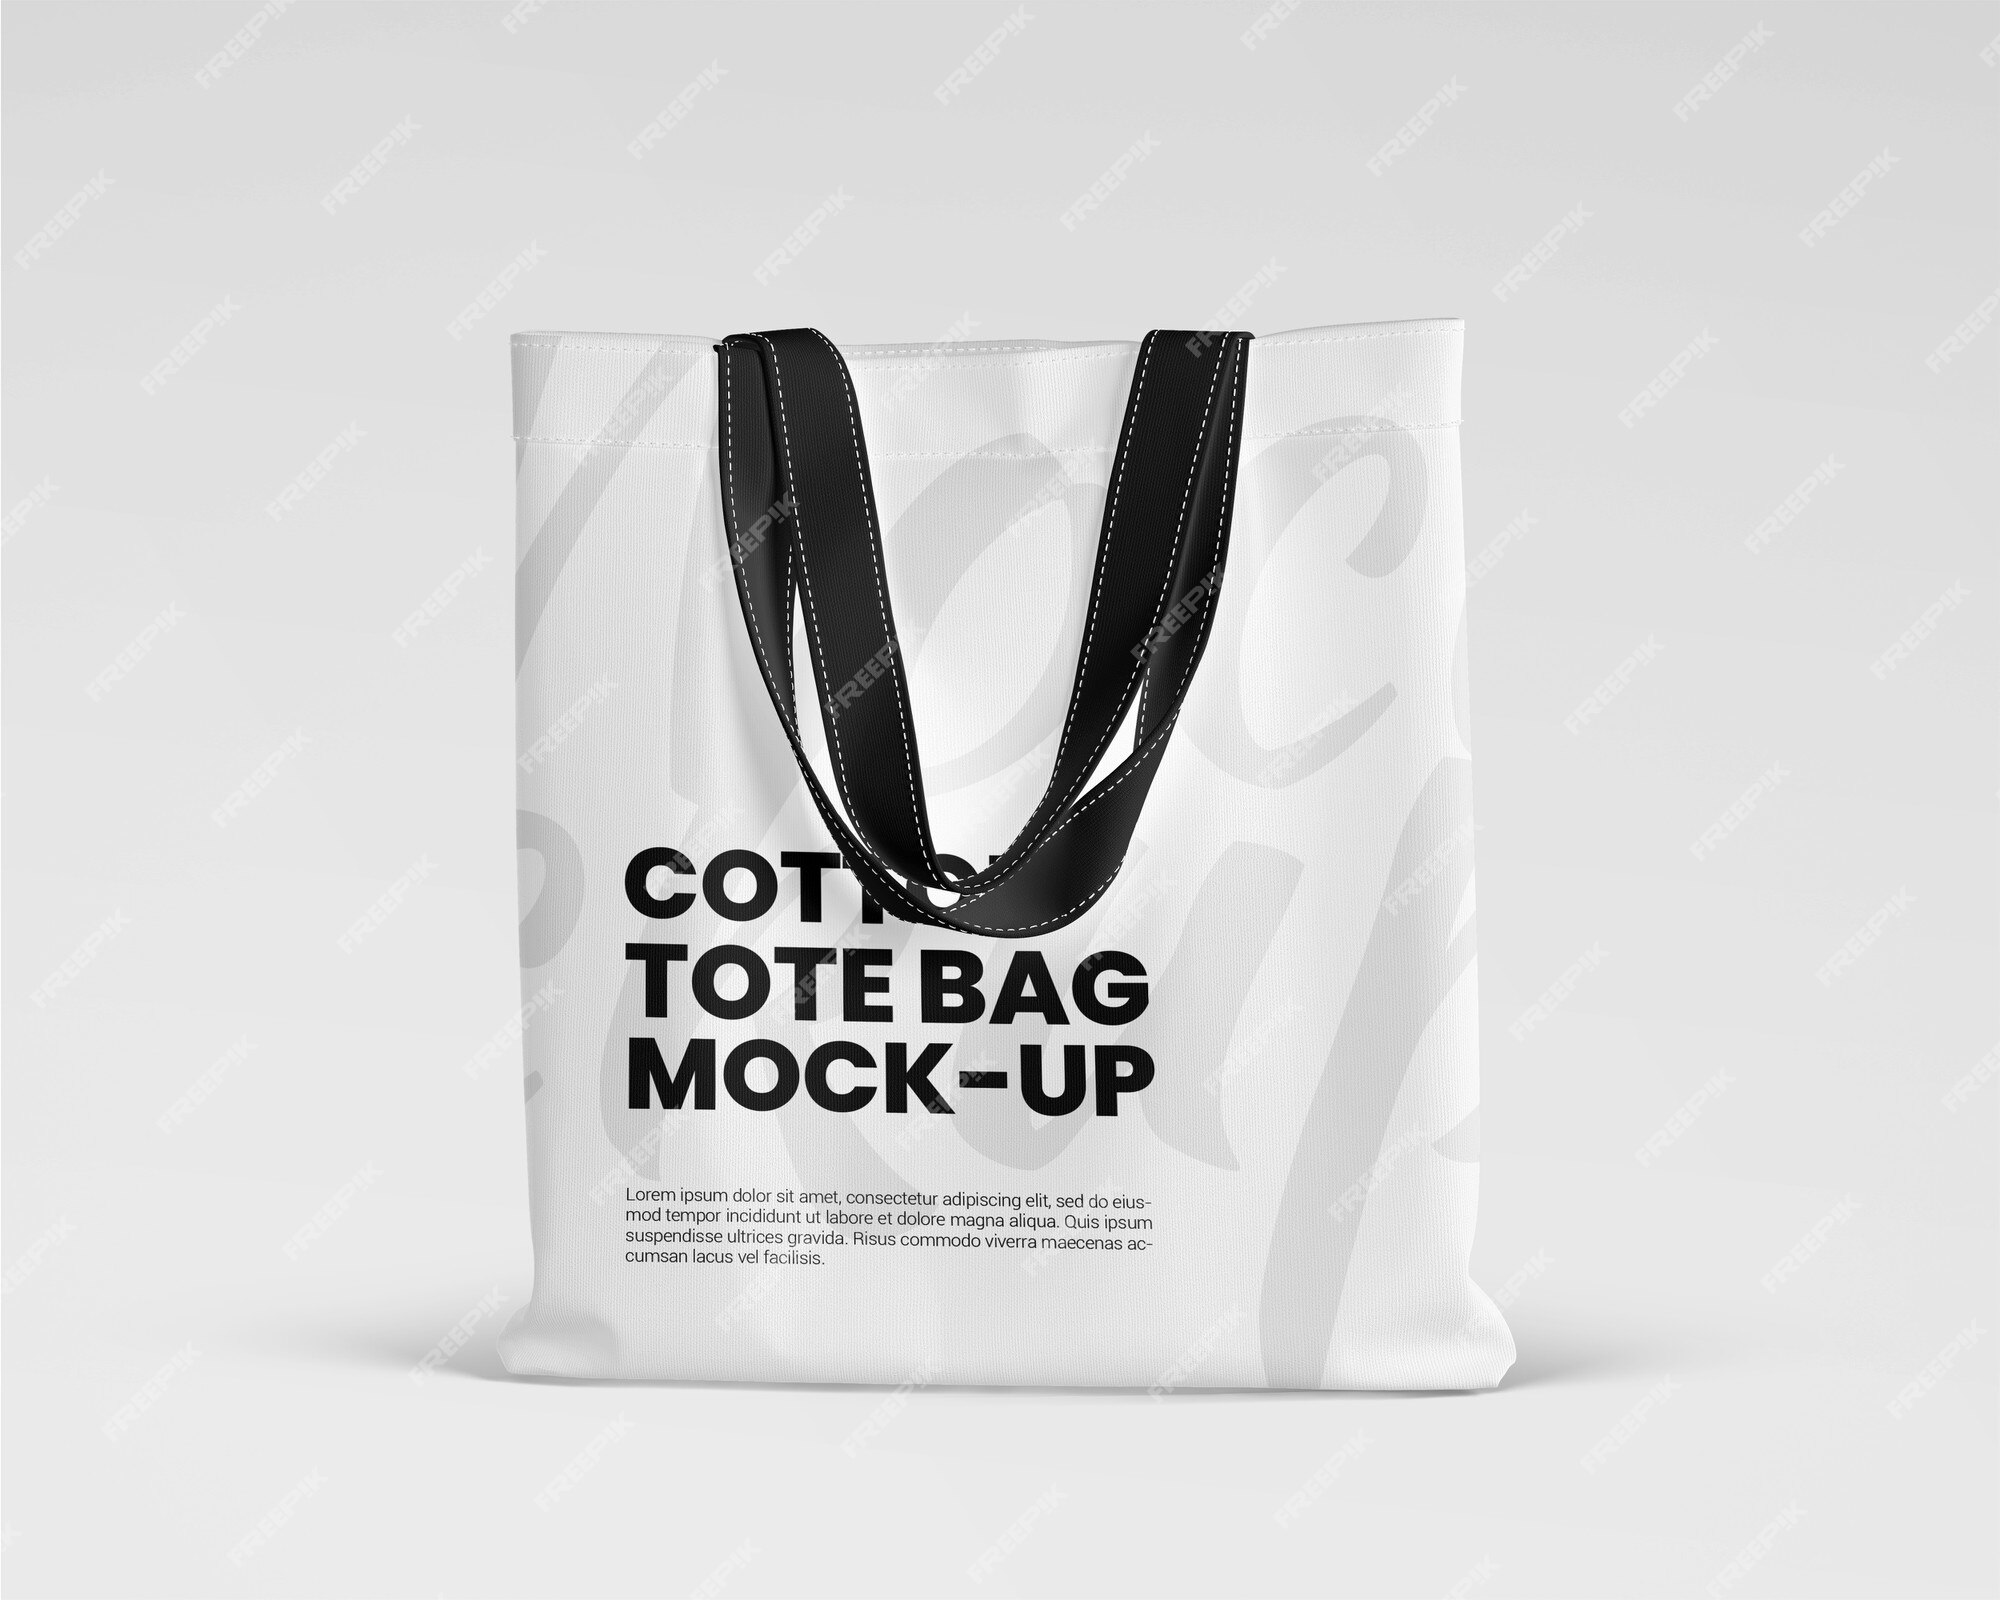 Premium PSD | Cotton tote bag mockup